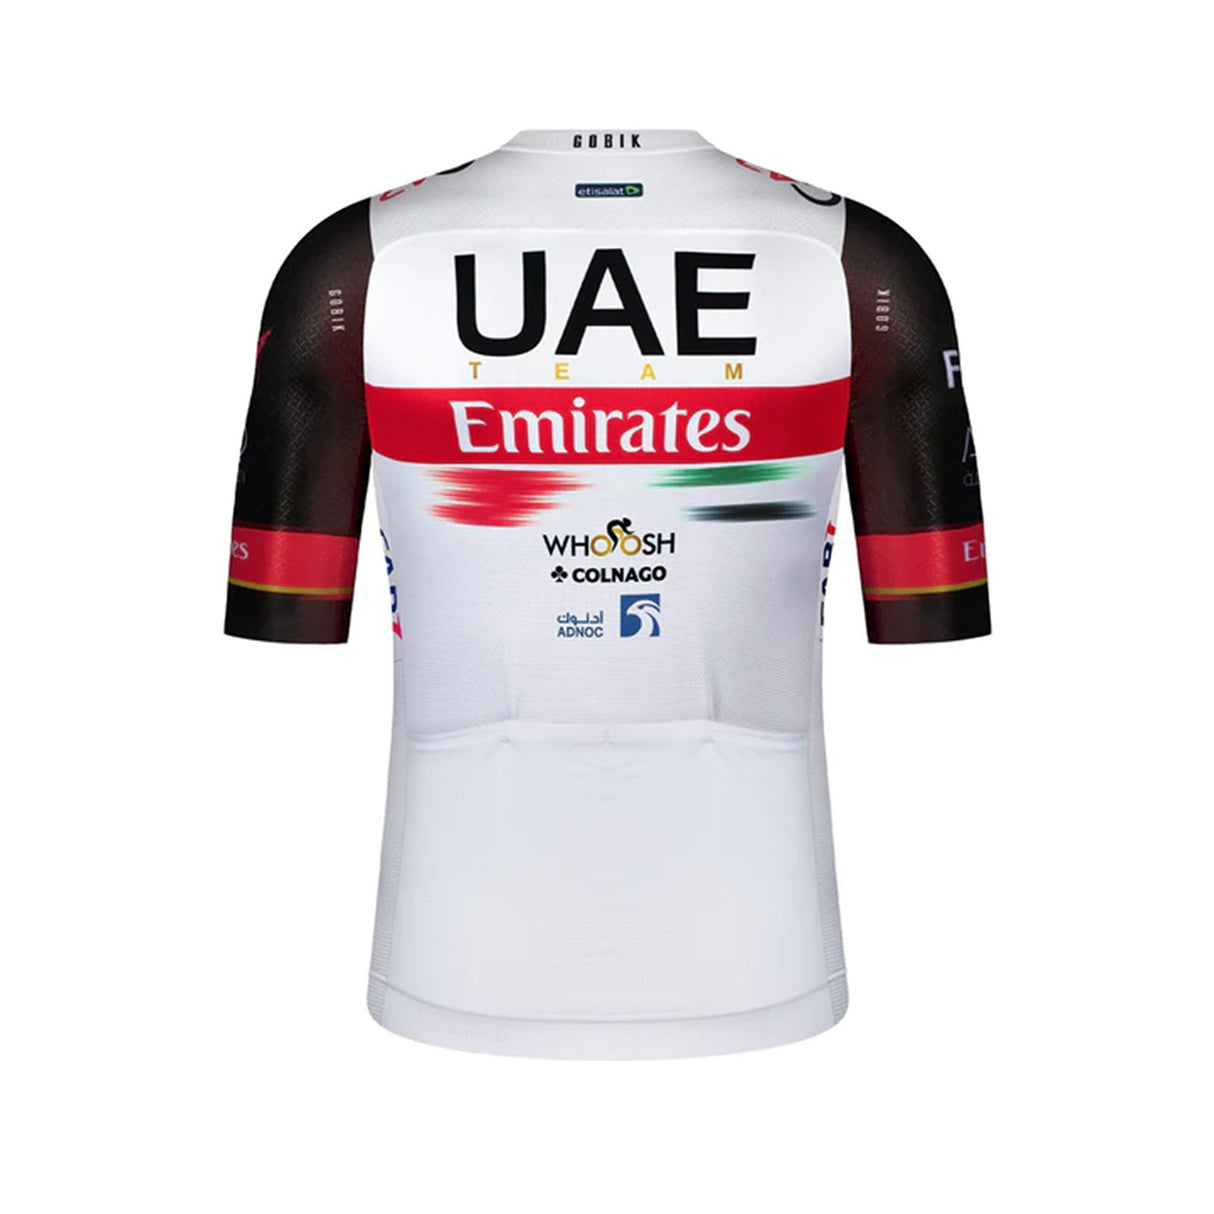 Gobik Infinity 2.0 World Tour UAE Team Emirates Jersey